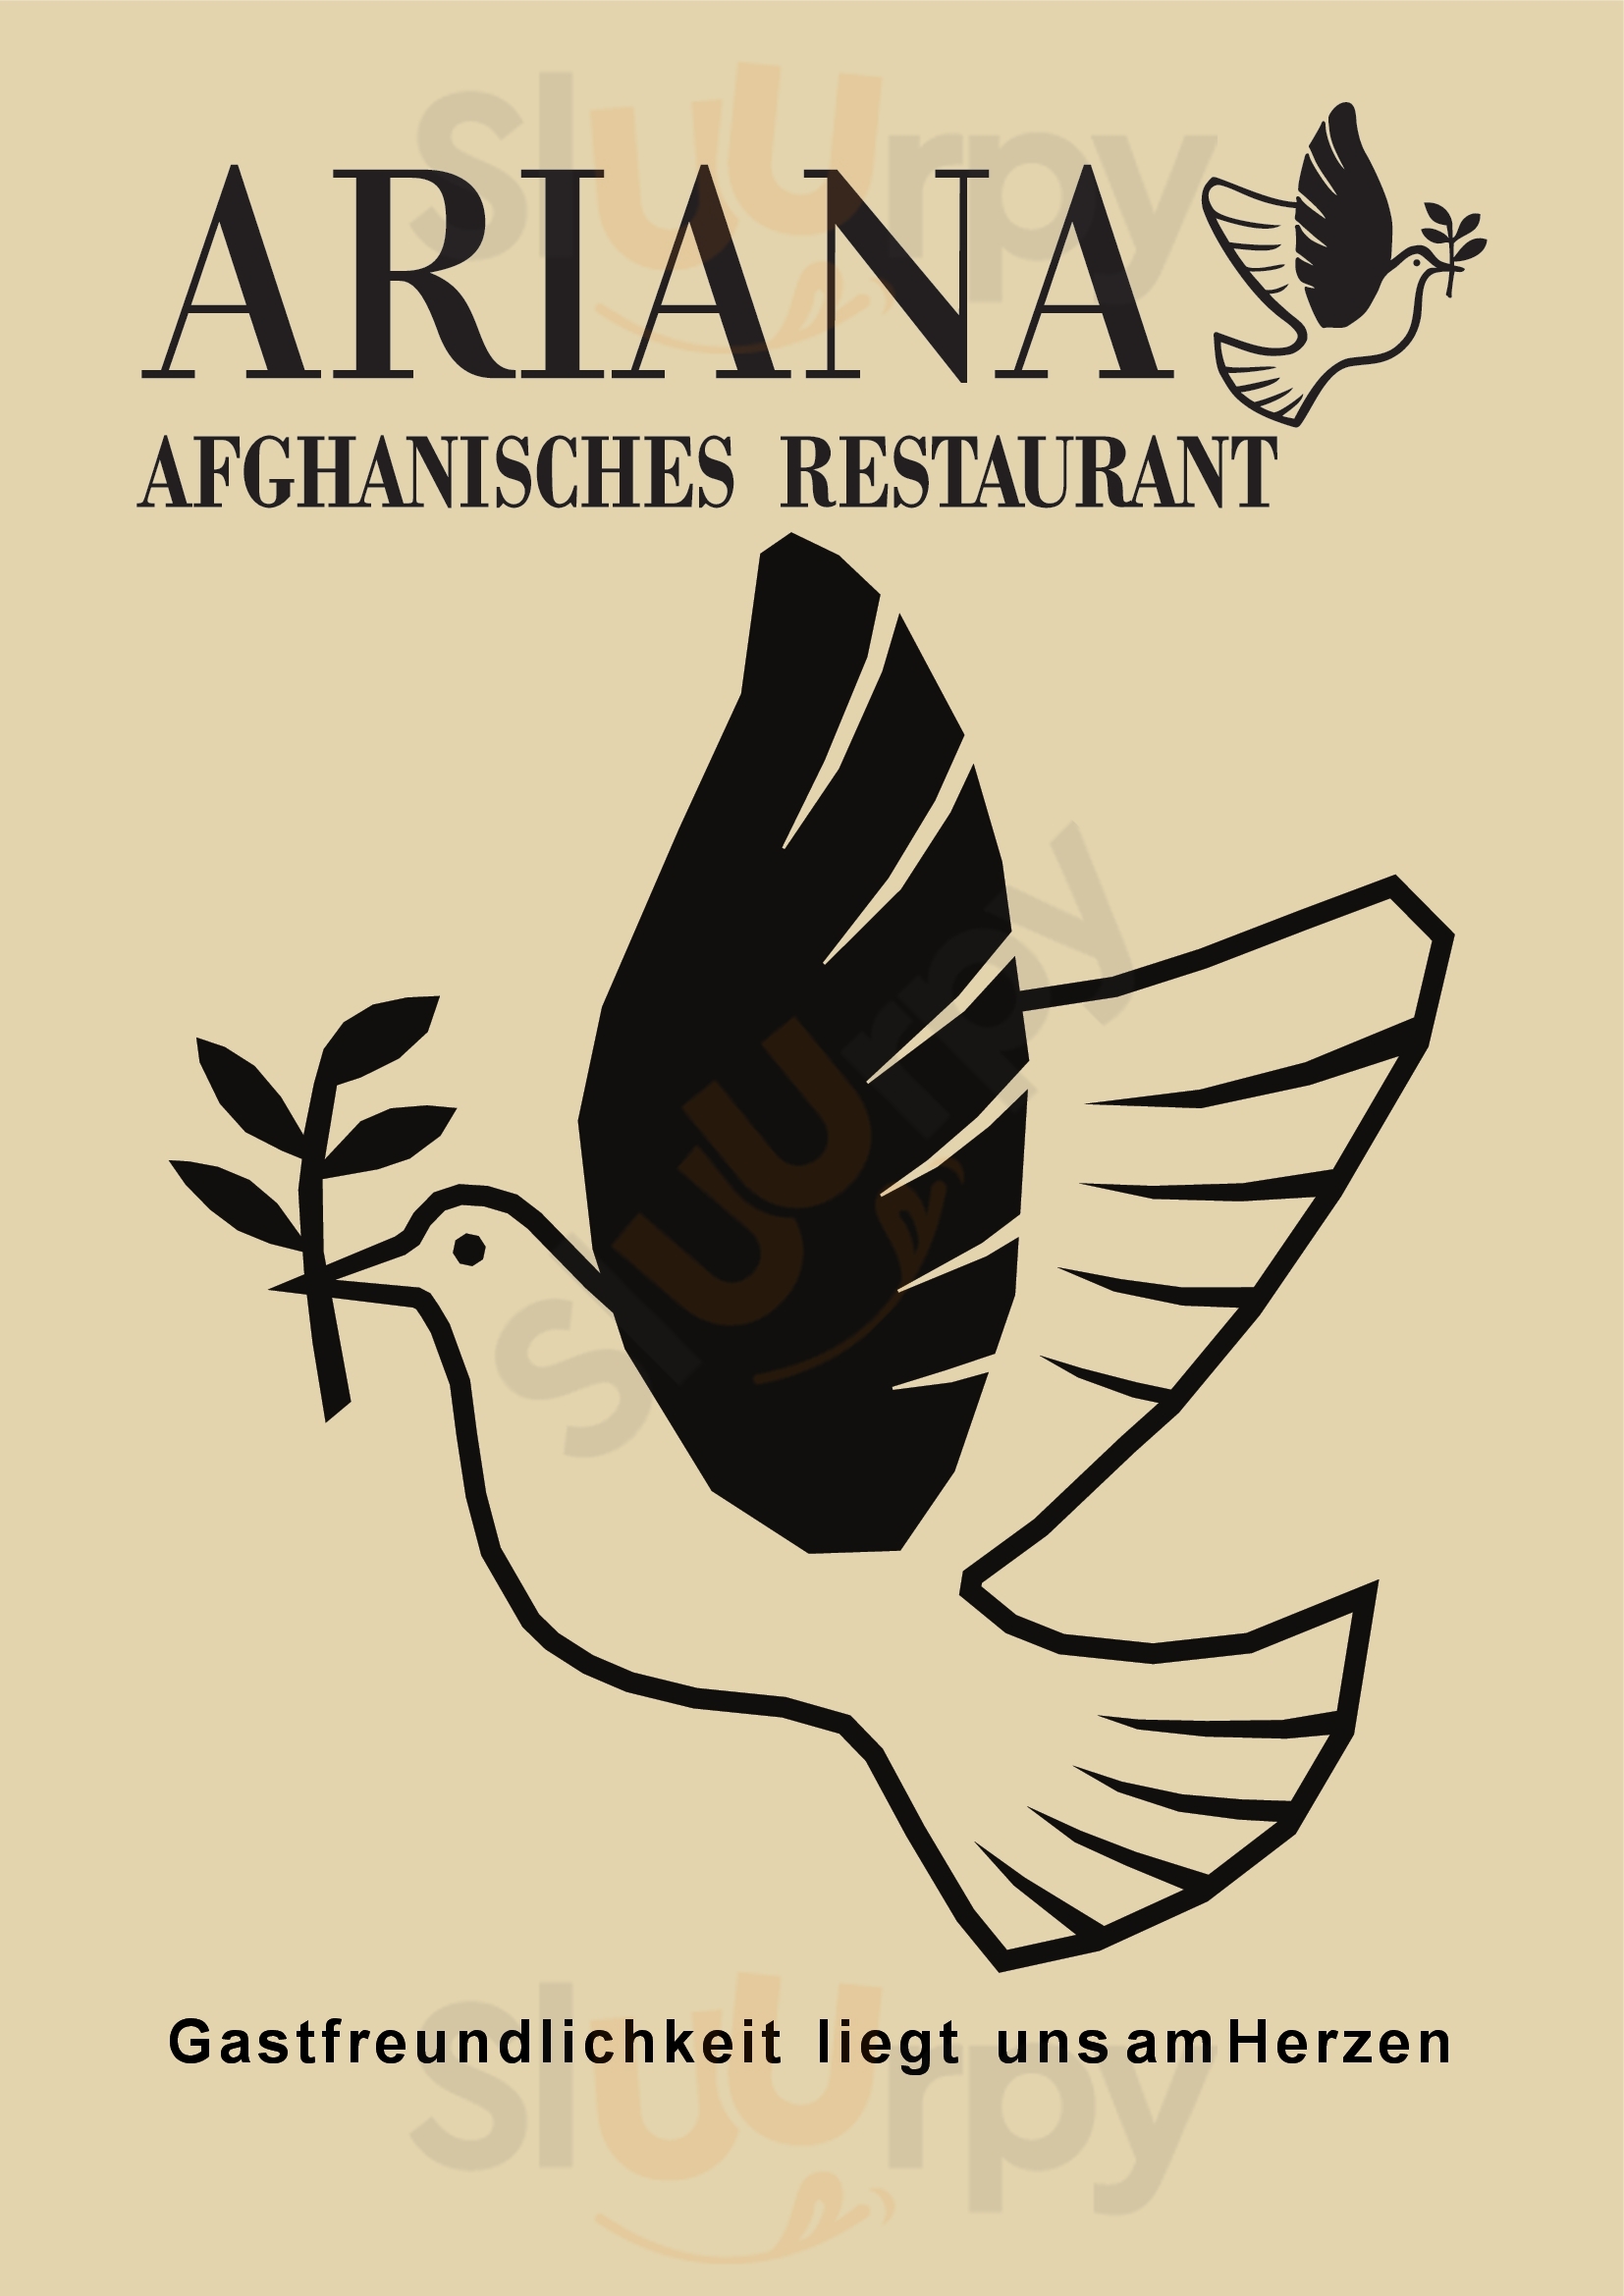 Ariana Afghanisches Restaurant Innsbruck Menu - 1